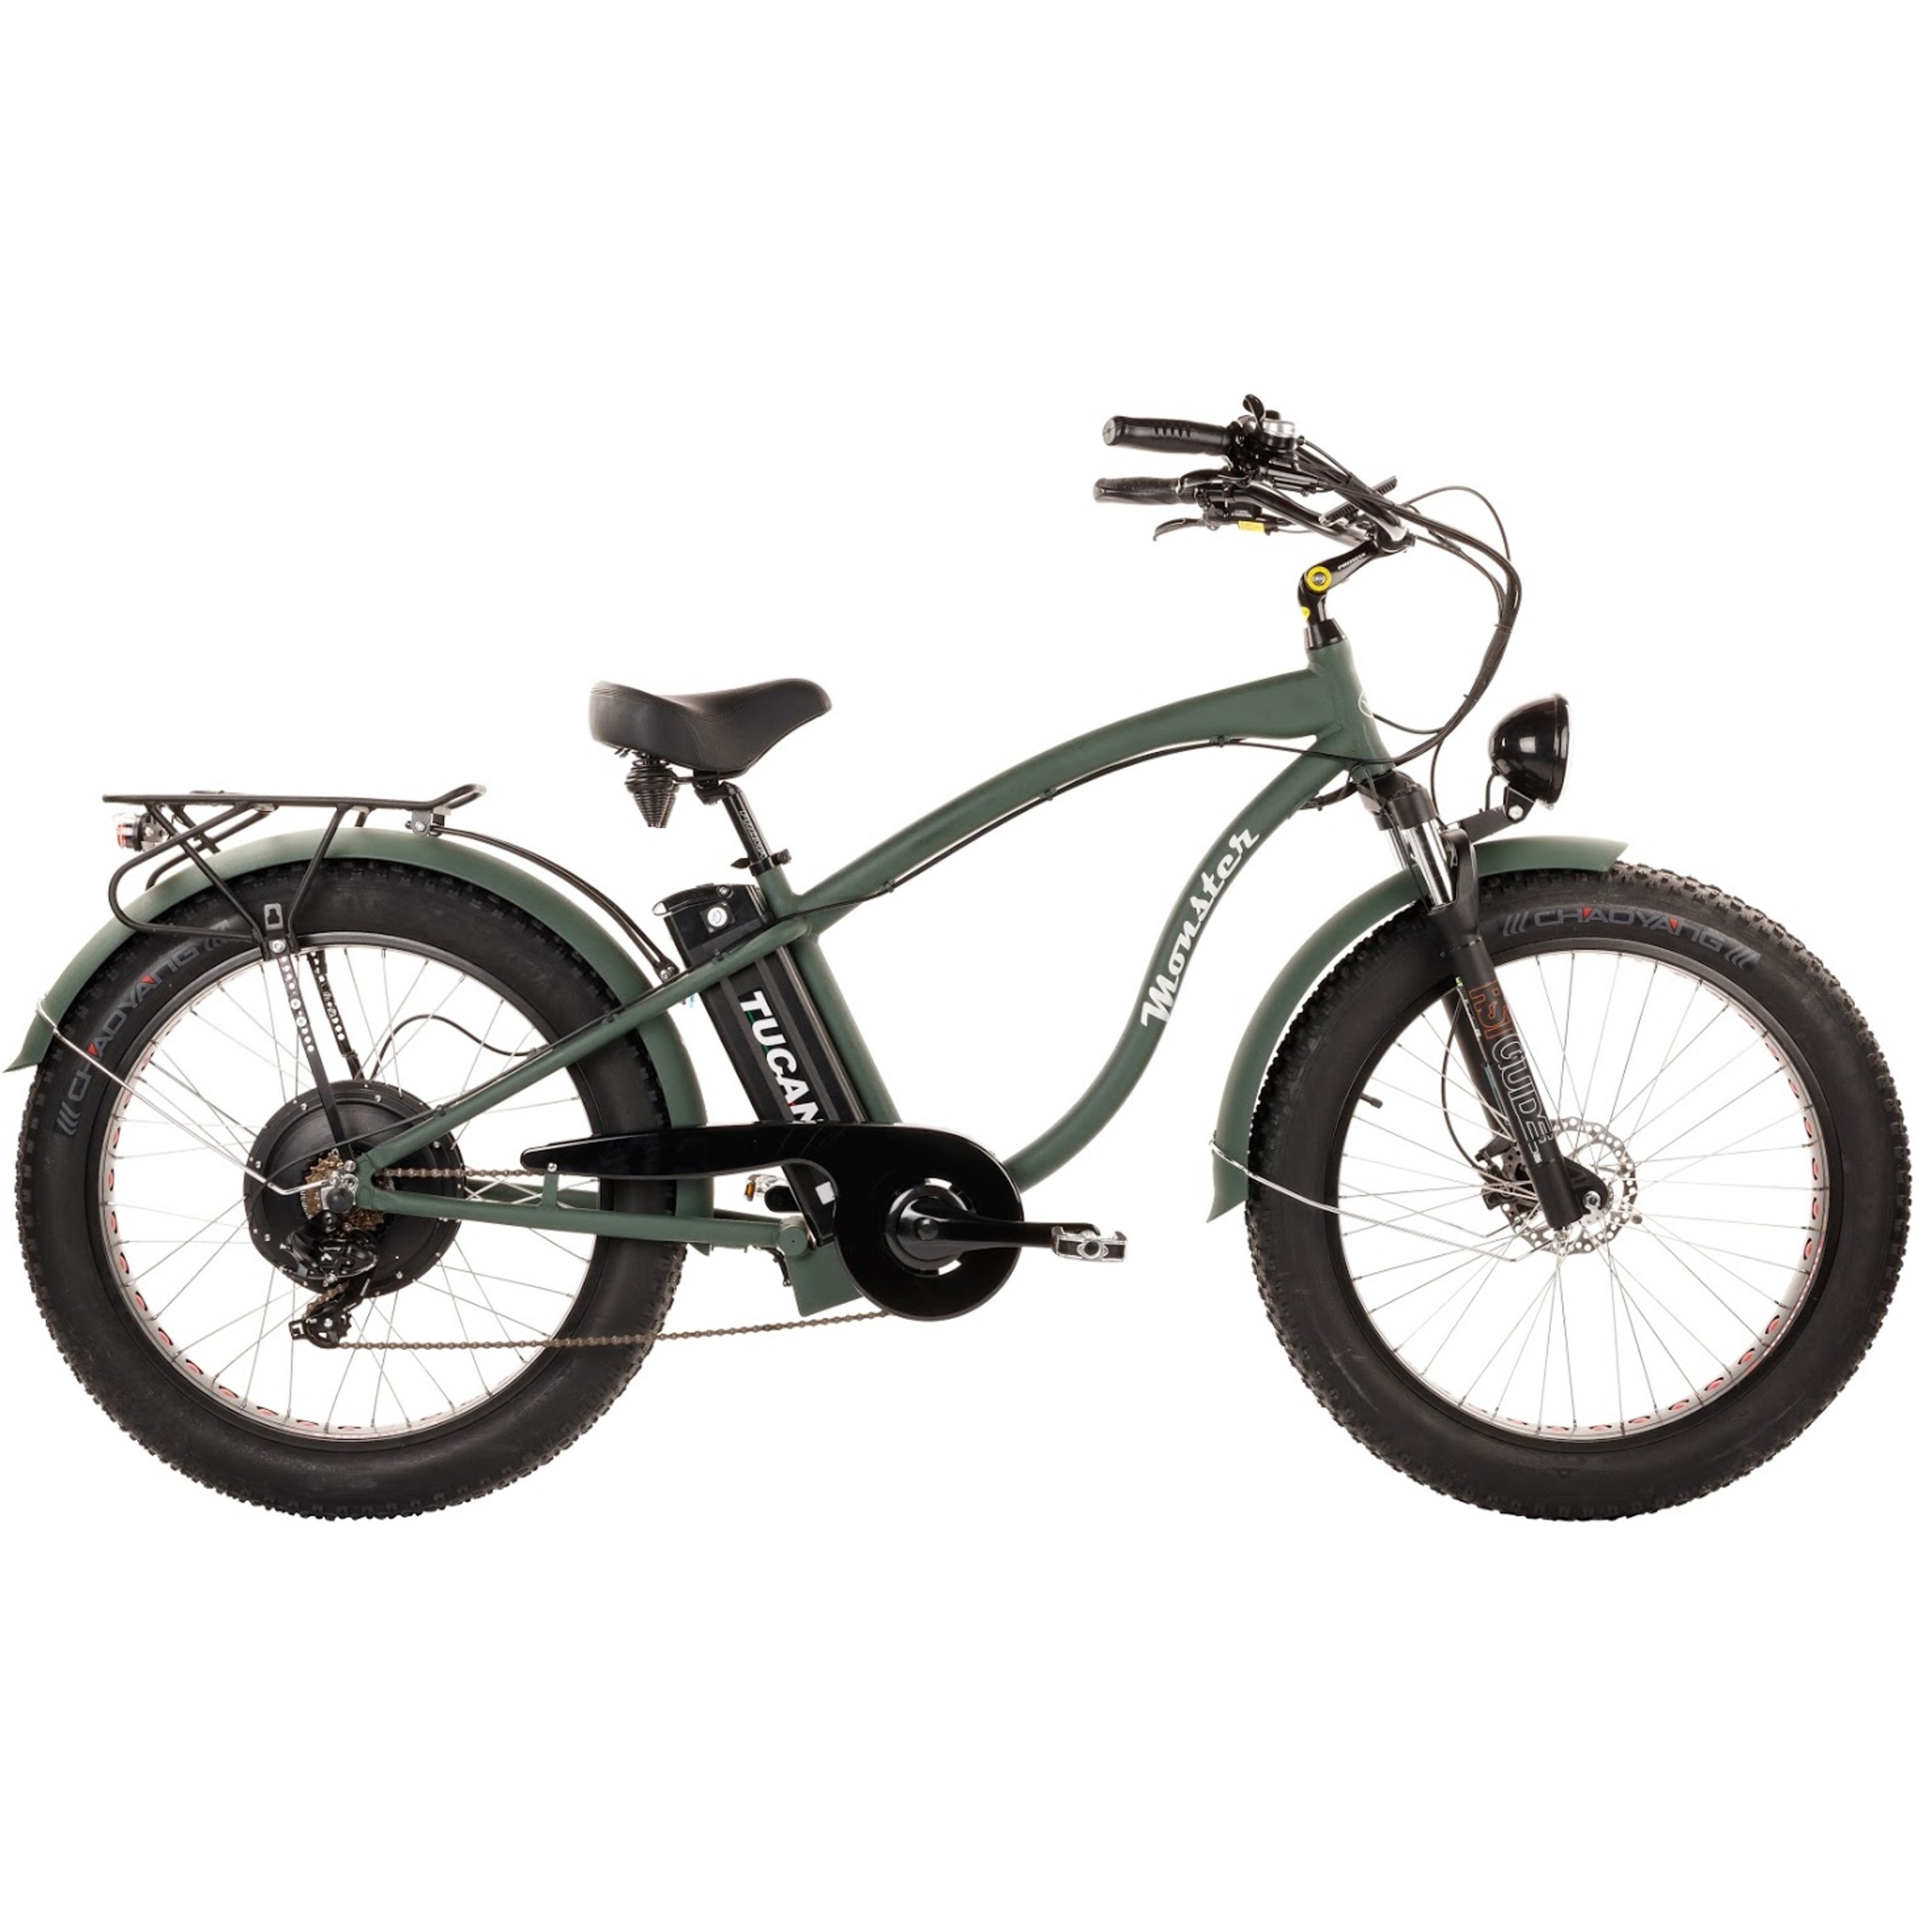 Bicicleta Electrica Tucano Monster 26? Ltd Limited